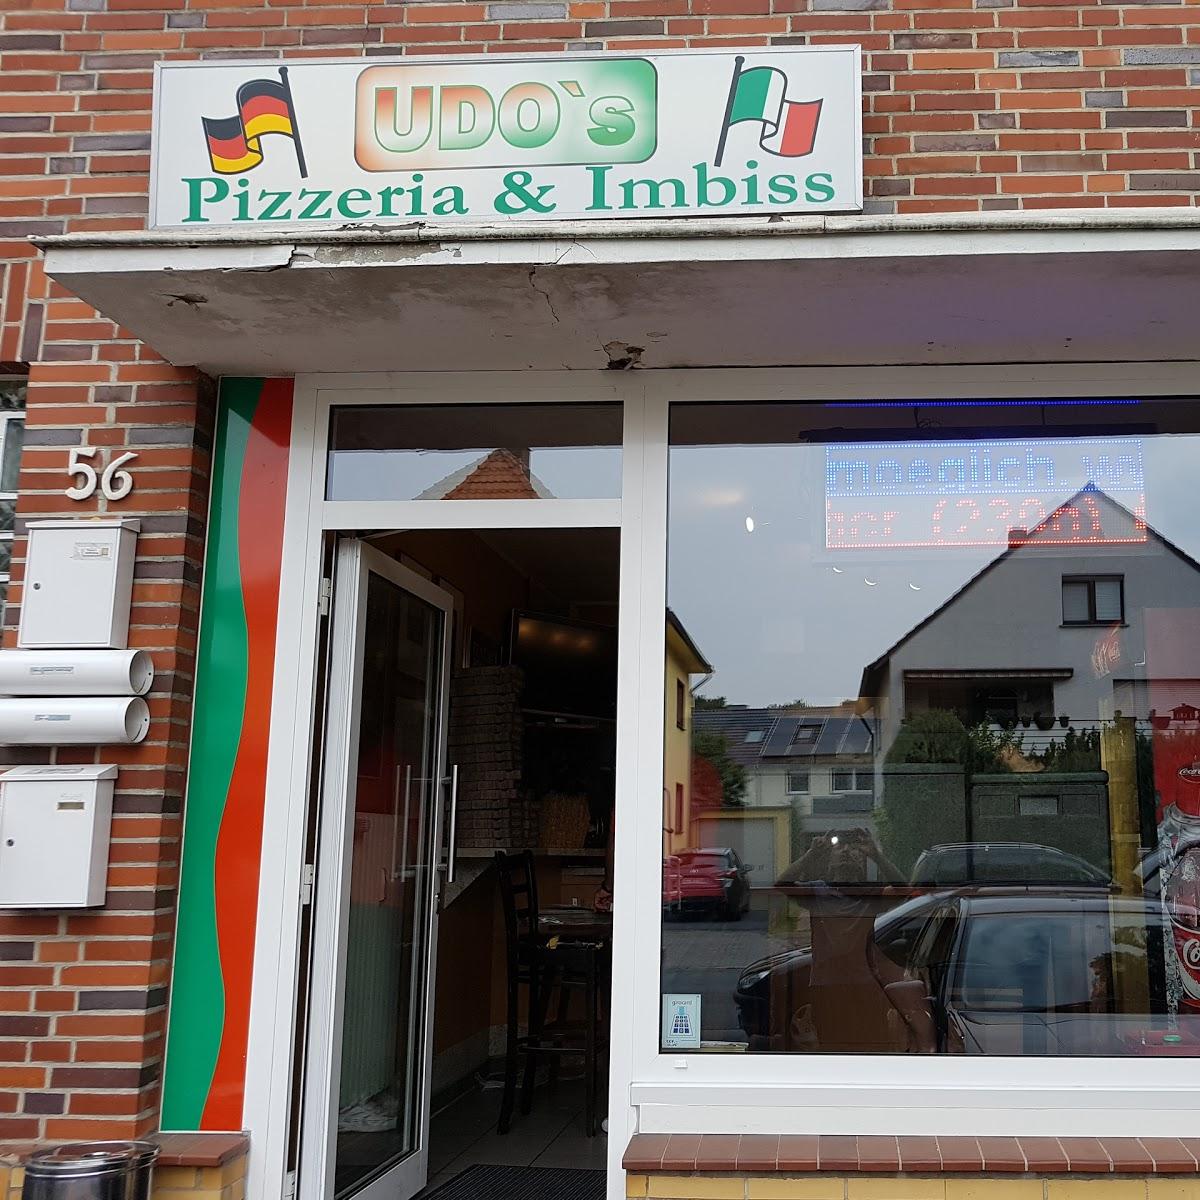 Udos Pizzeria & Imbiss